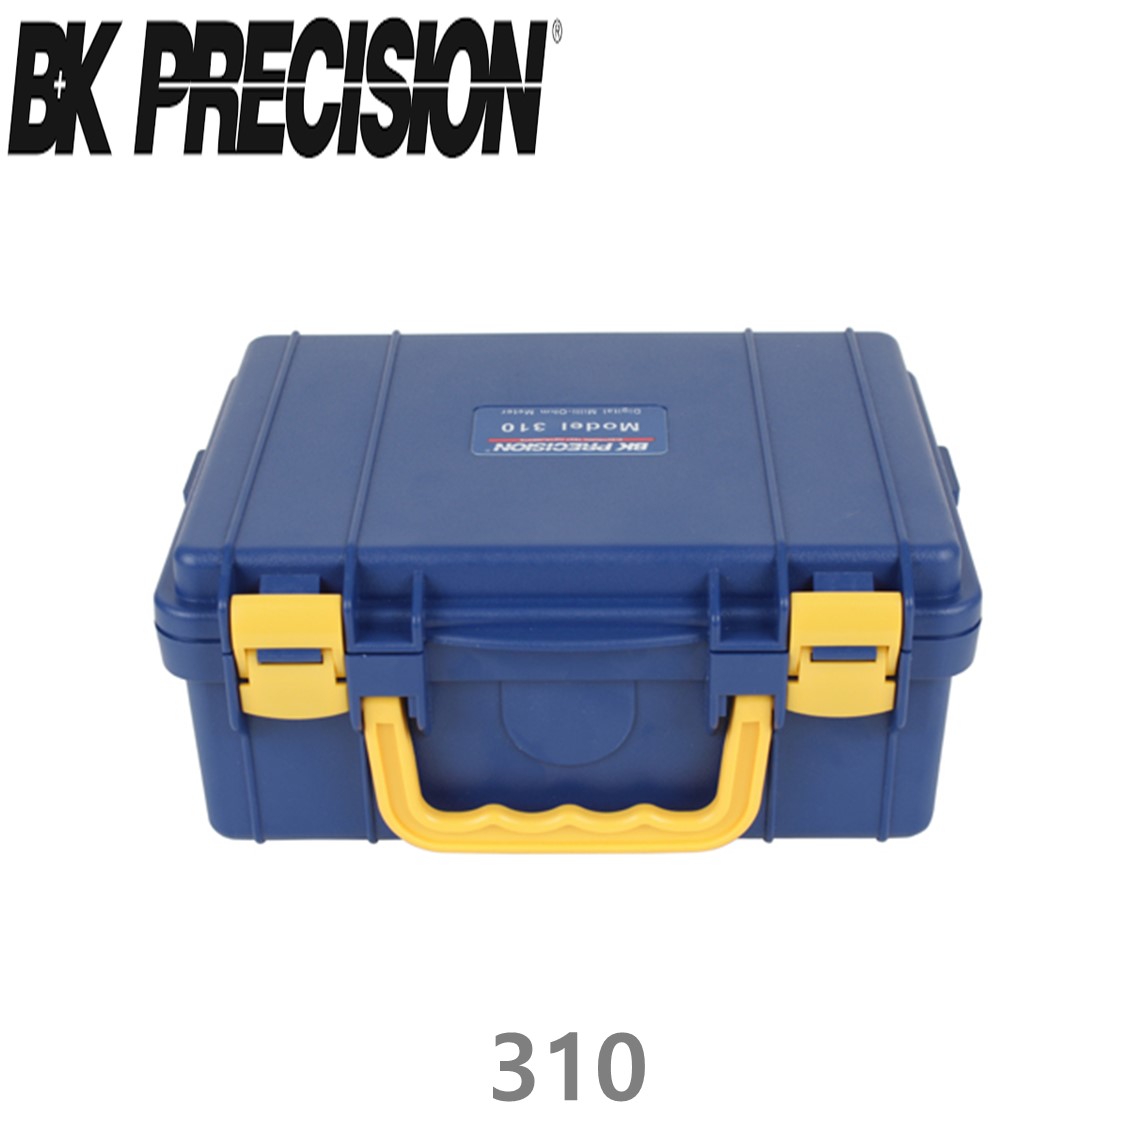 [ BK Precision ] 310  디지털 밀리옴미터, 저항계